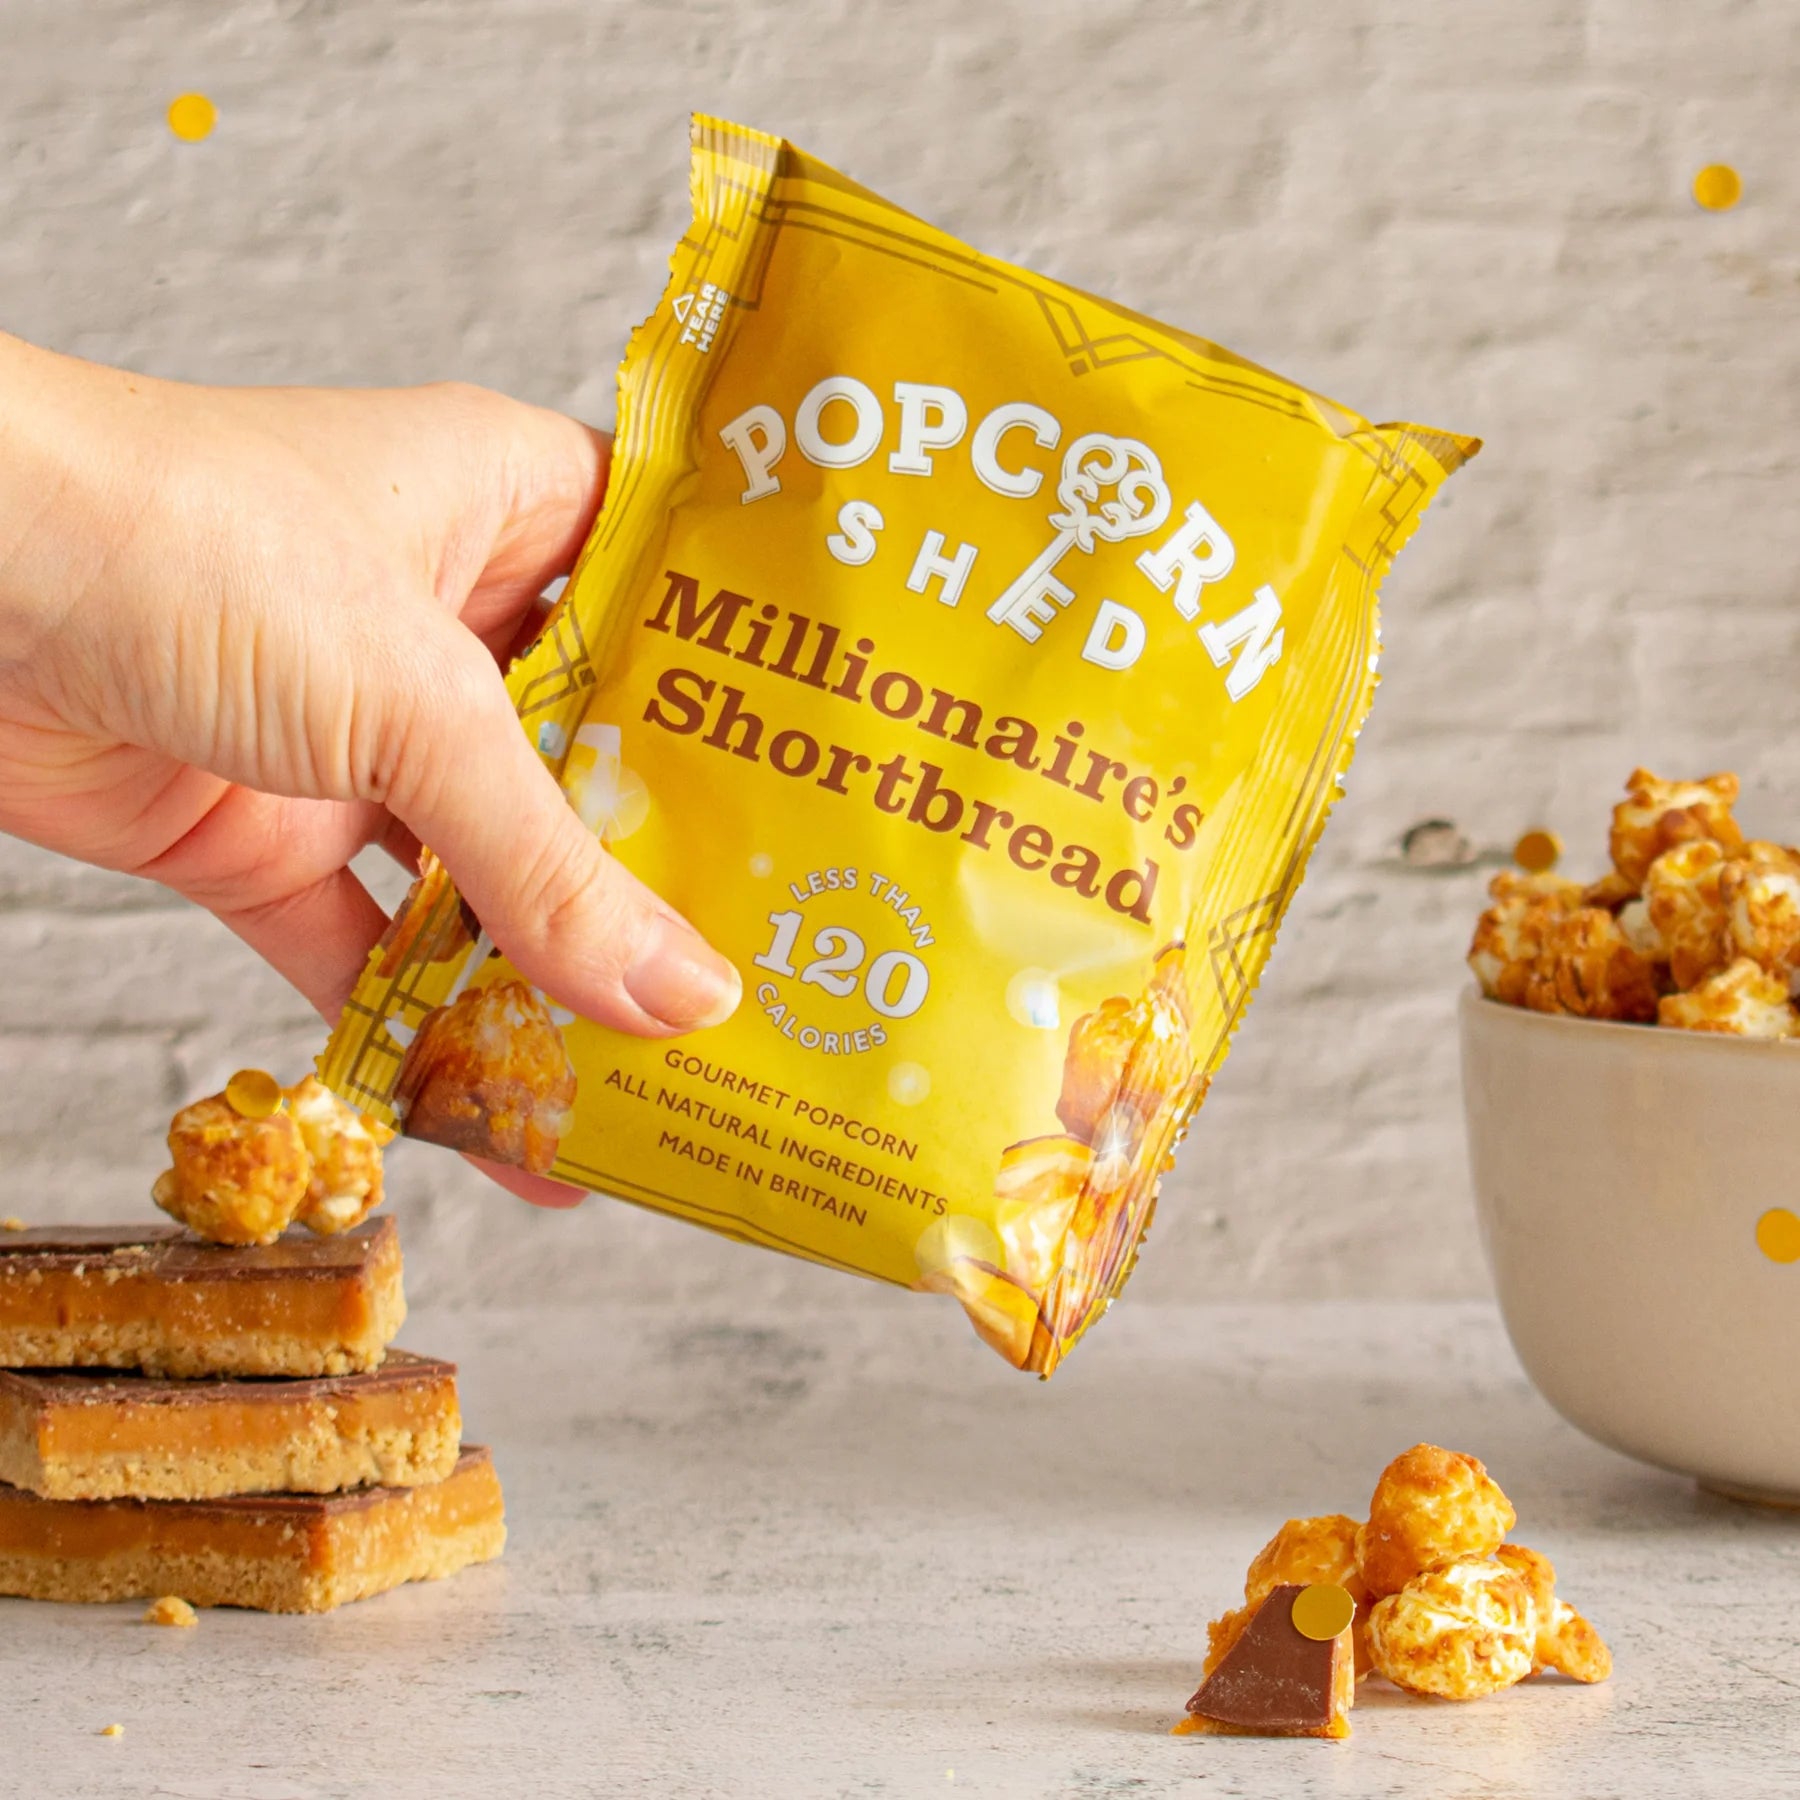 Popcorn | Millionaire Shortbread